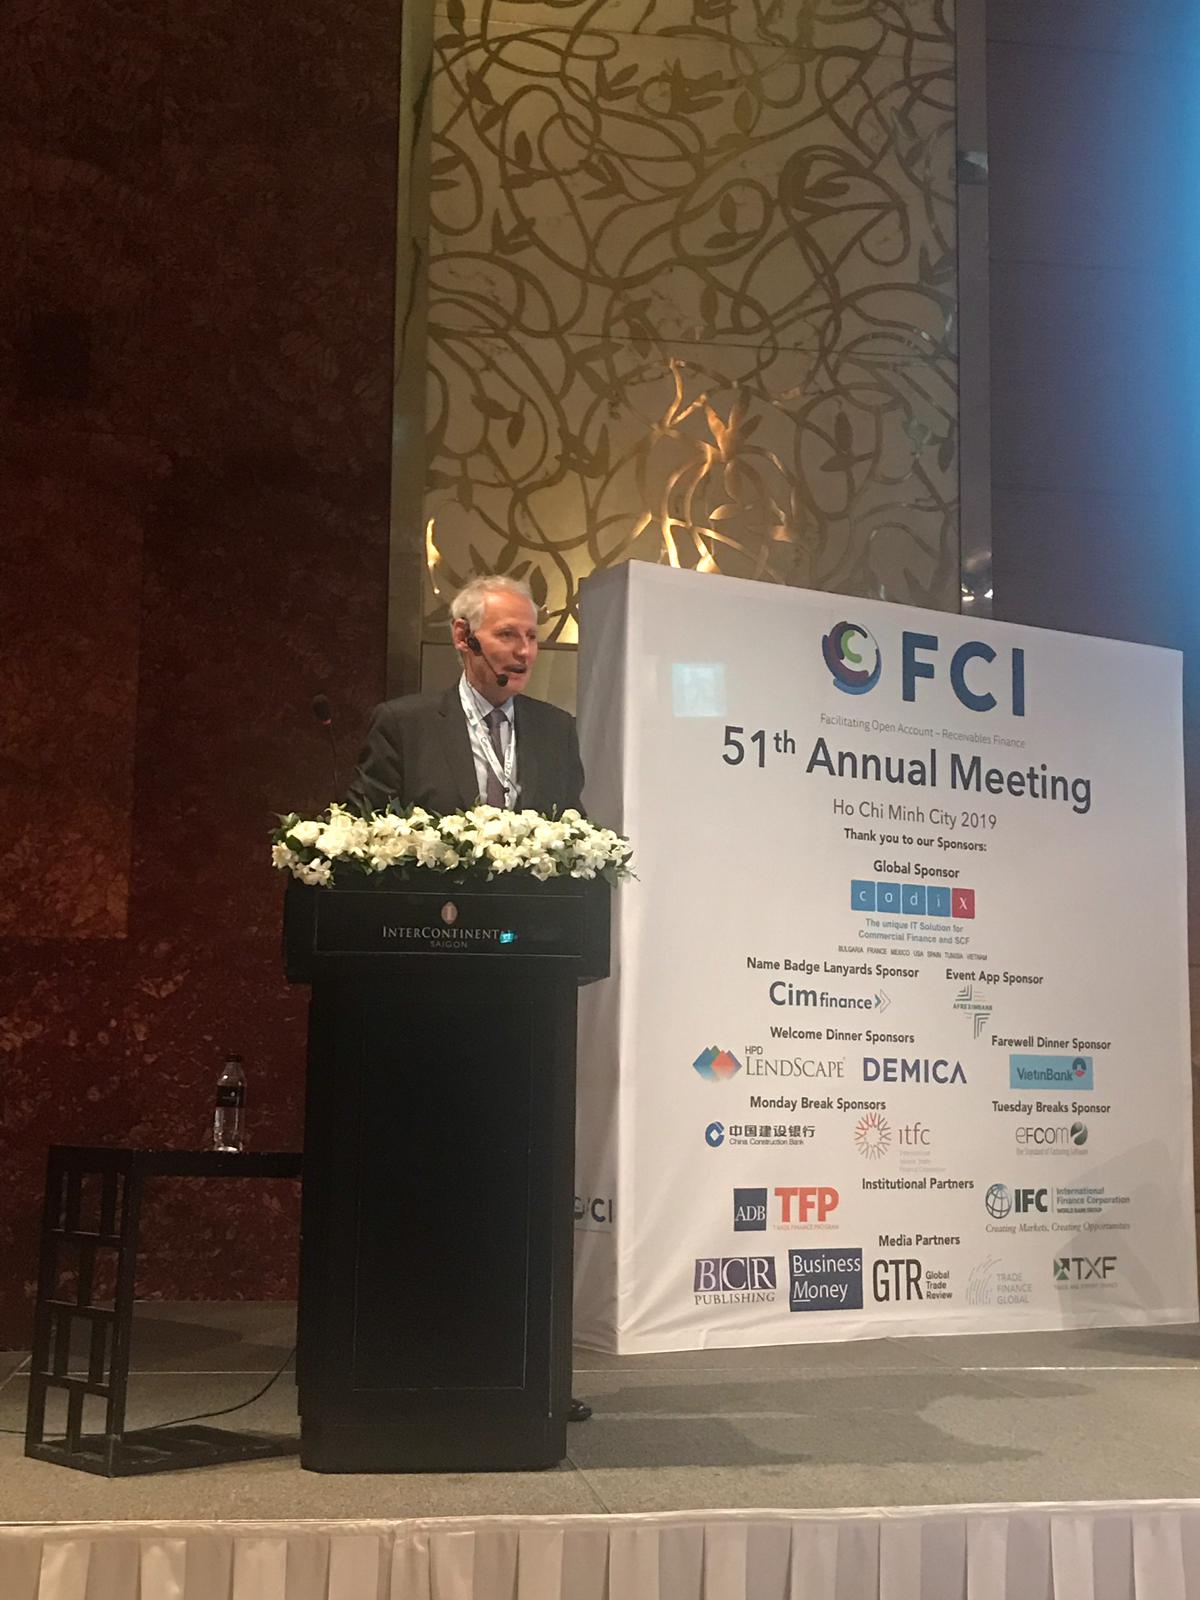 Patrick de Villepin, new chairman of FCI